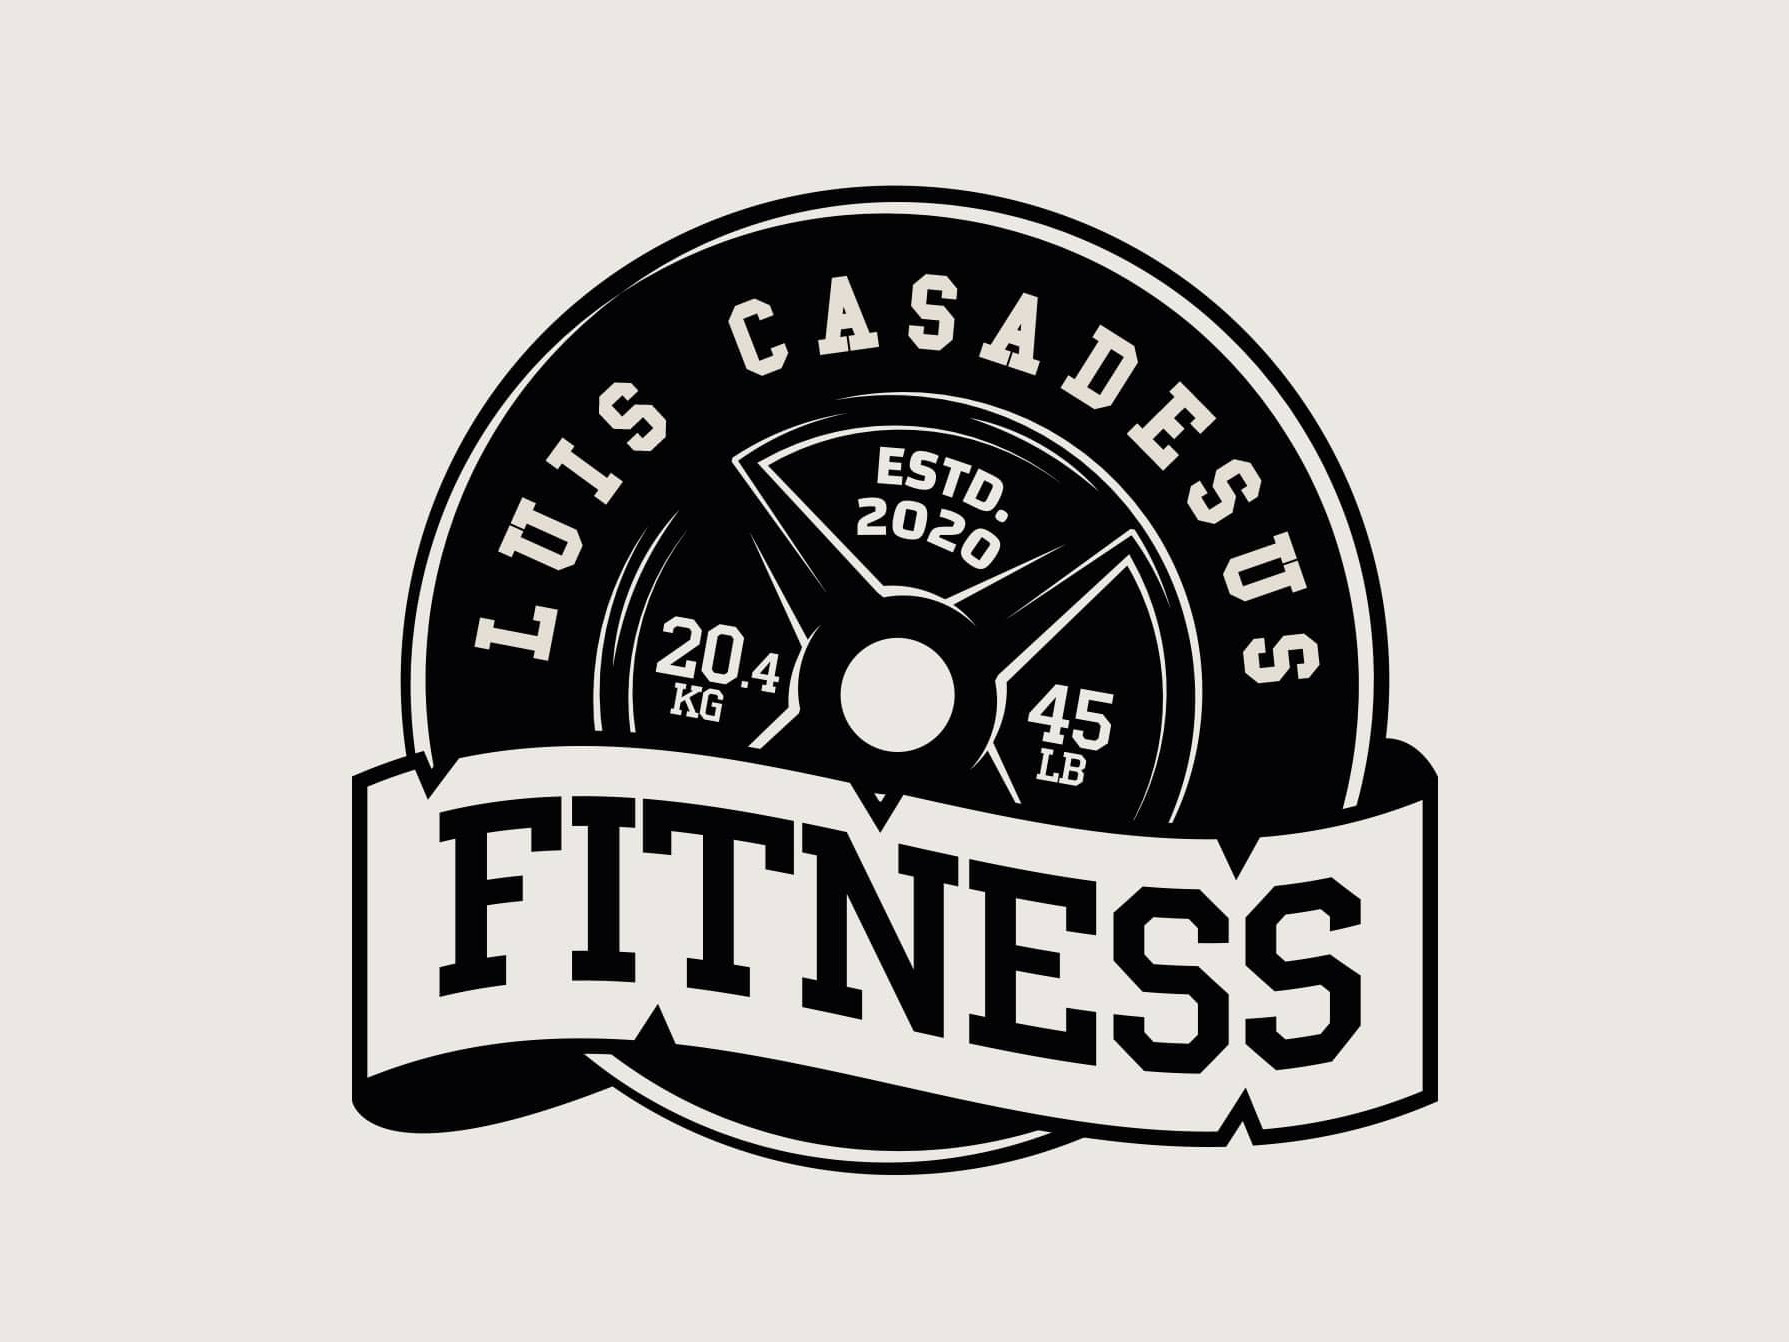 Luis Fitness